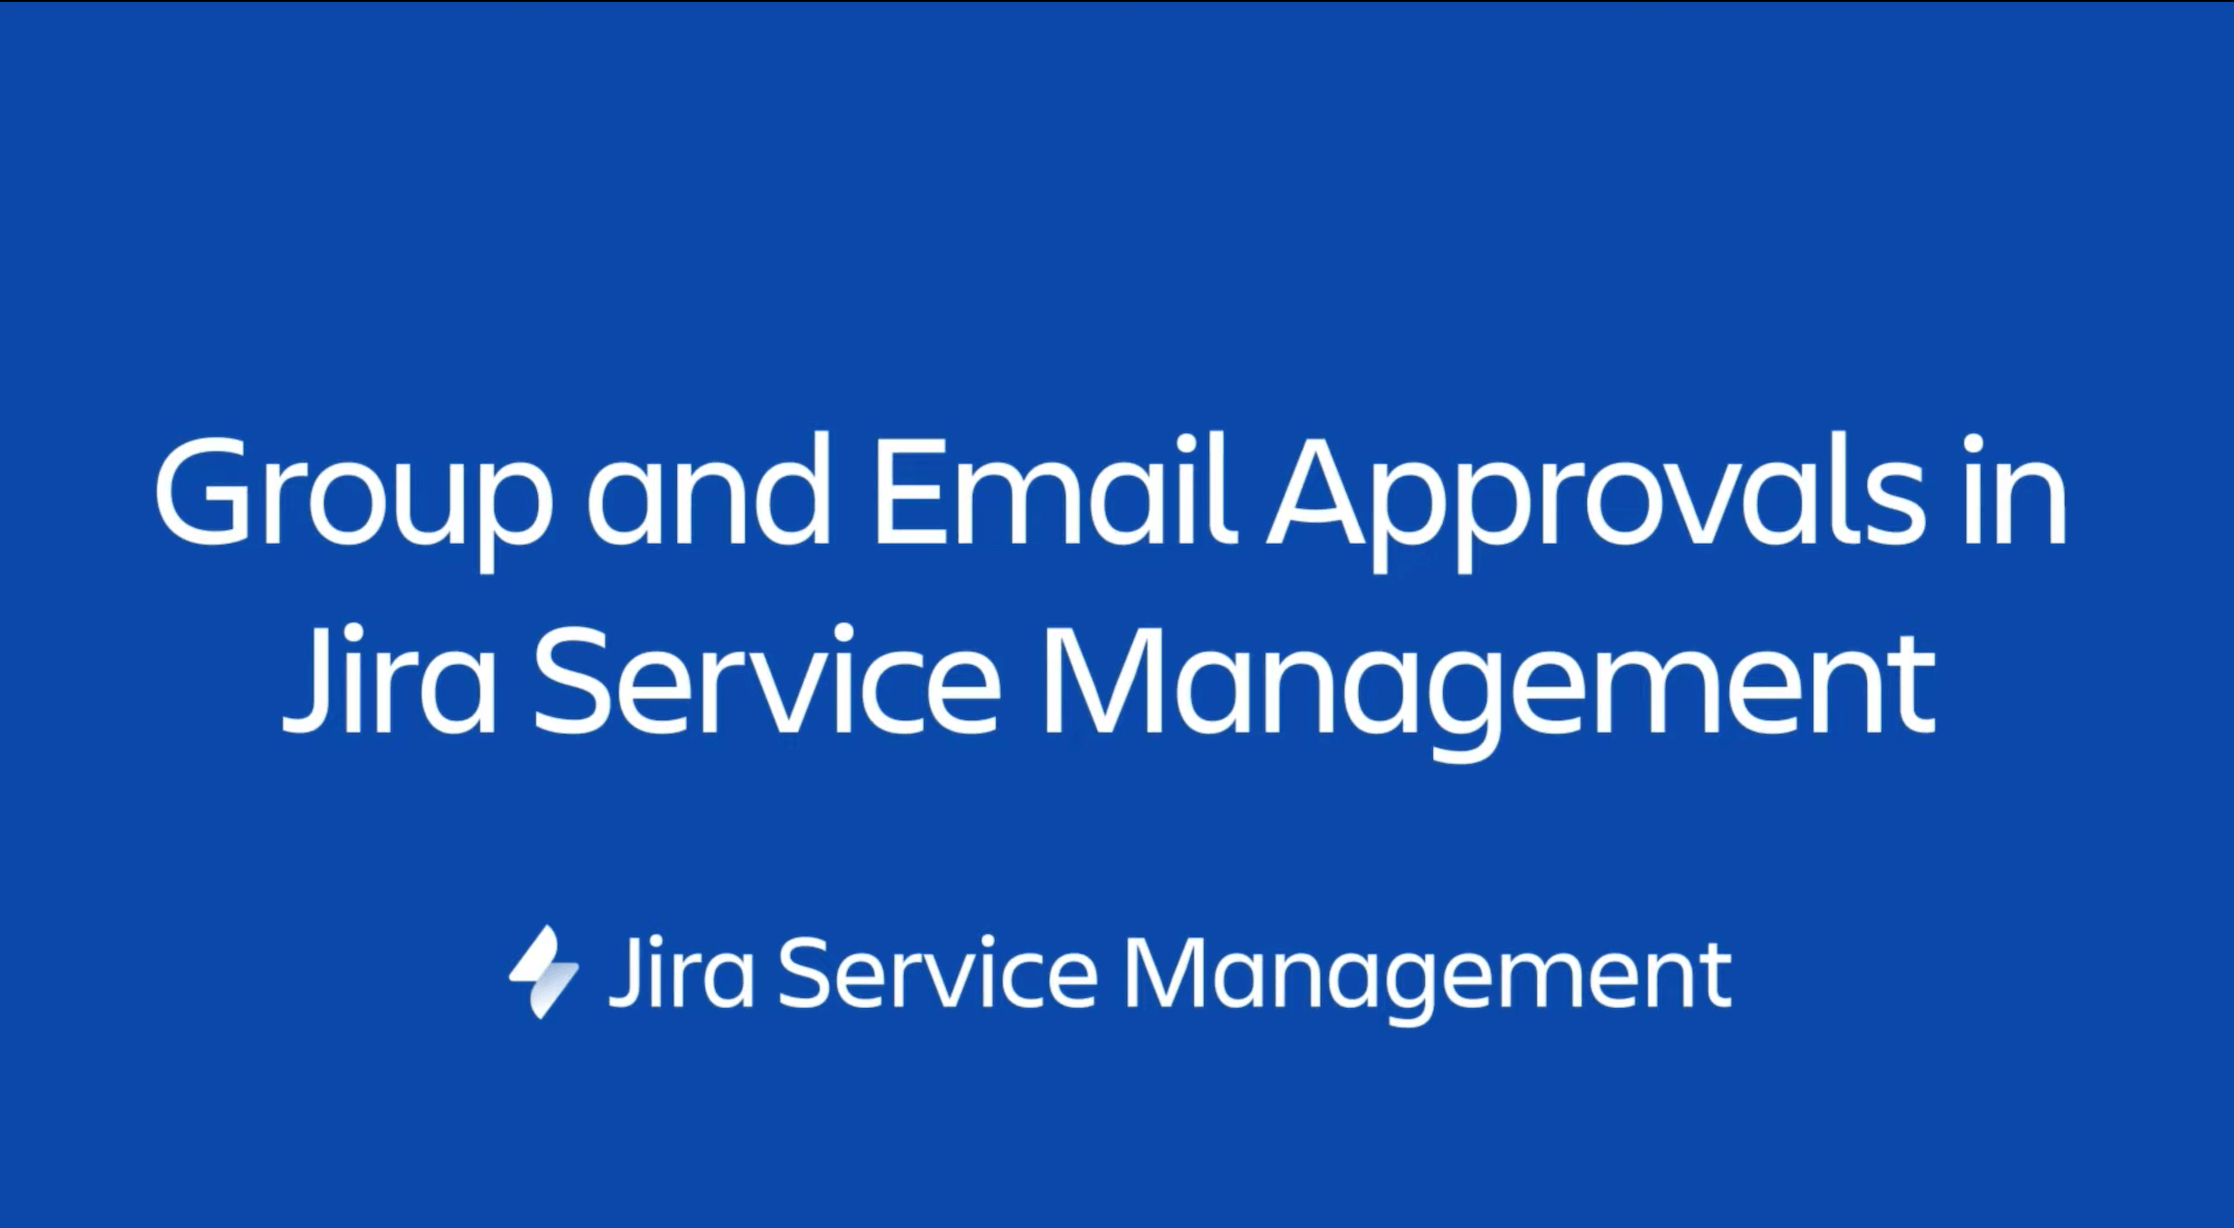 Recopila informes de errores en Jira Service Management